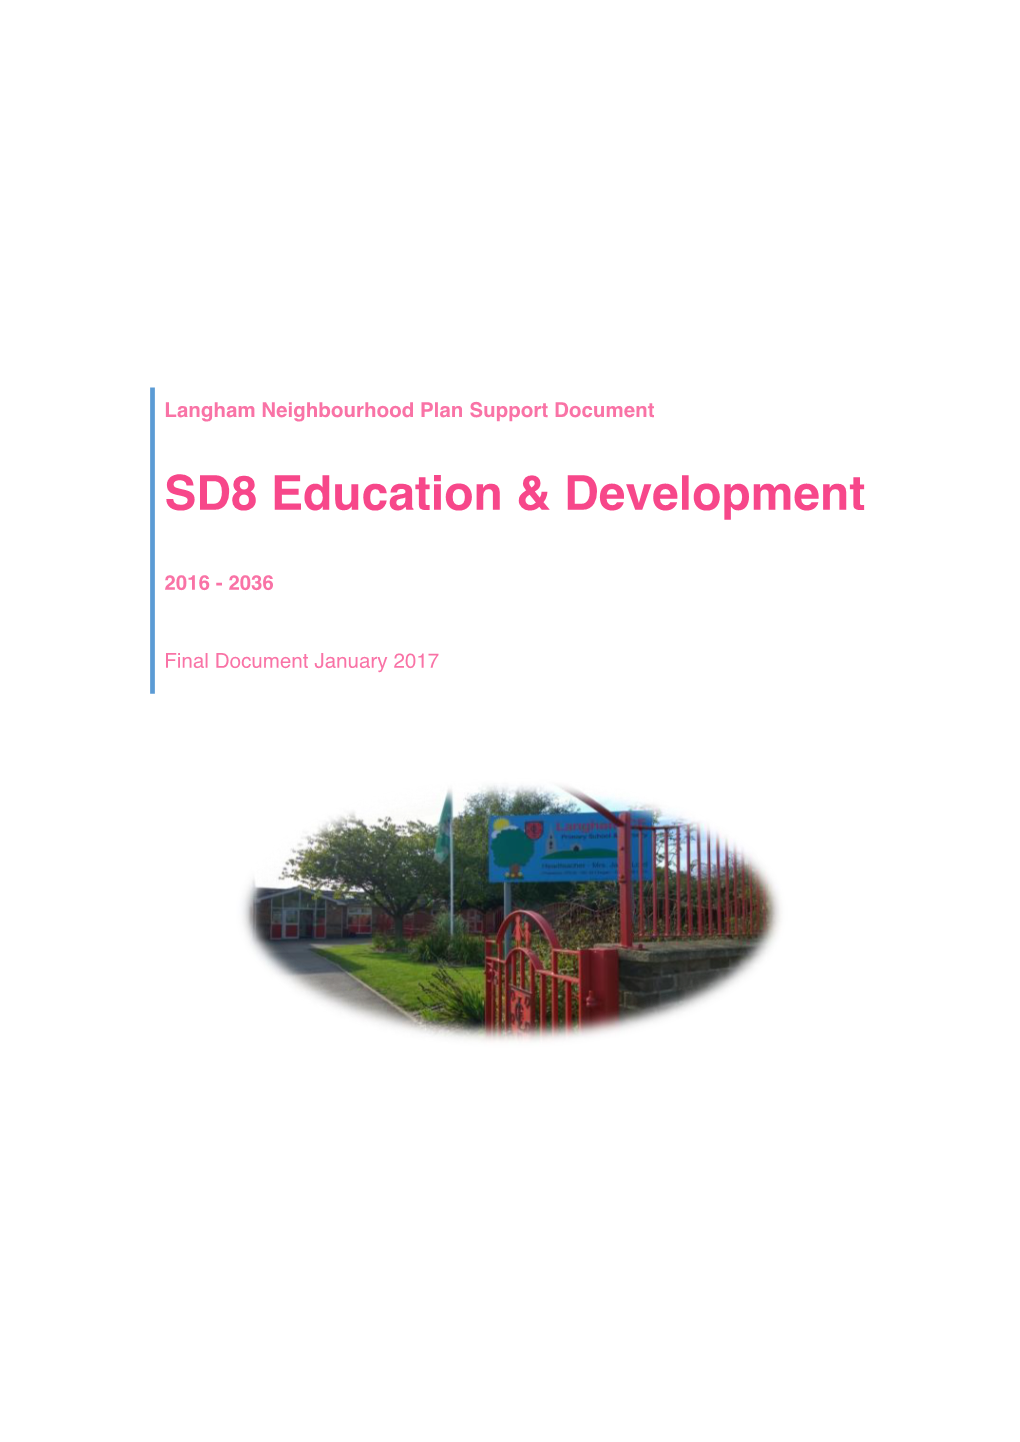 SD8 Education & Development